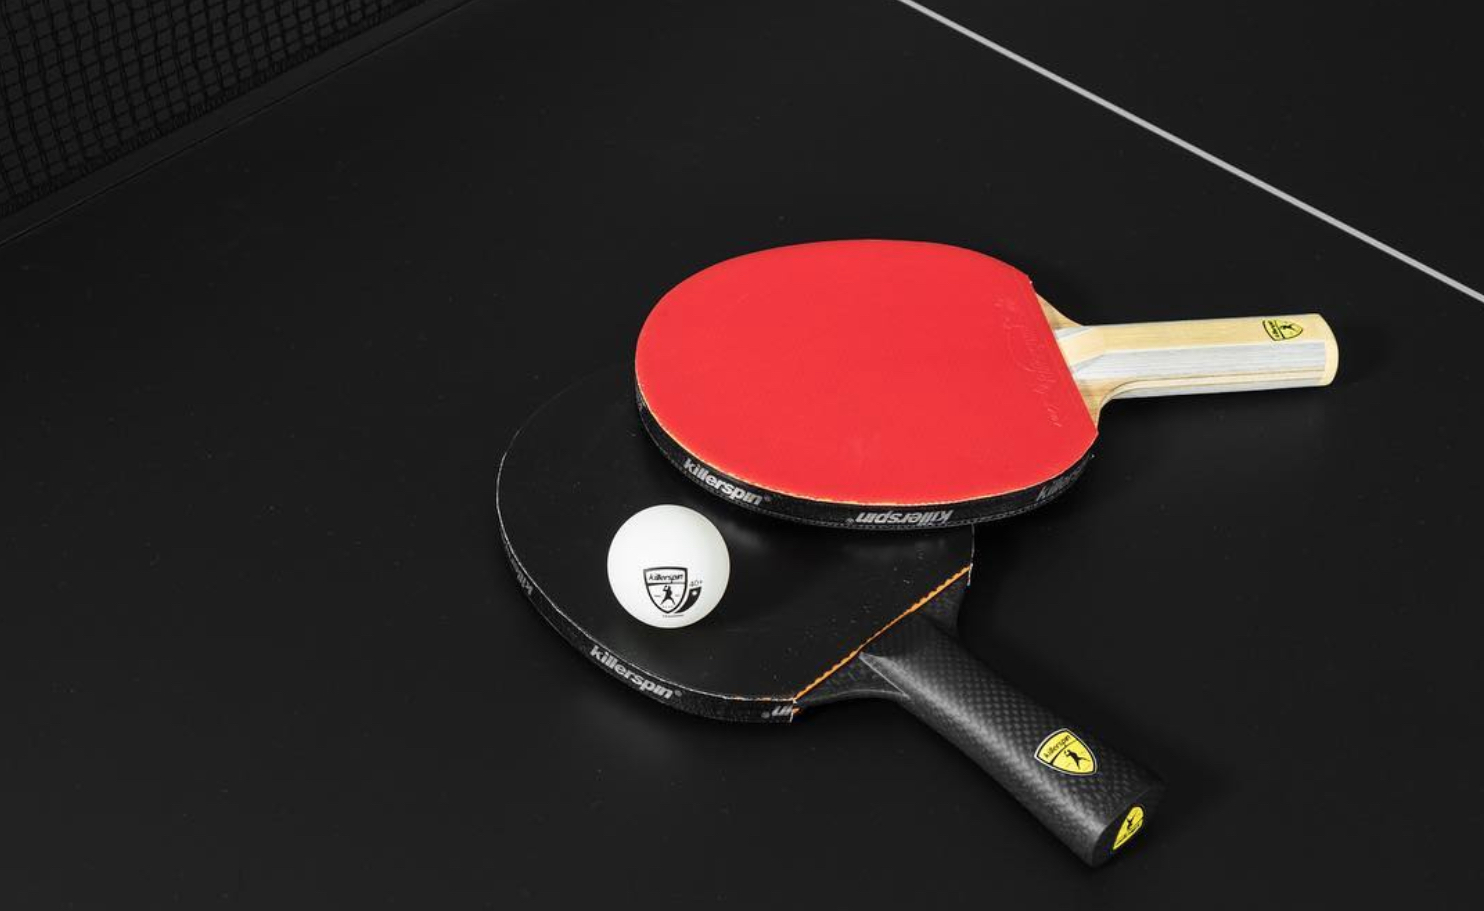 Asian ping pong